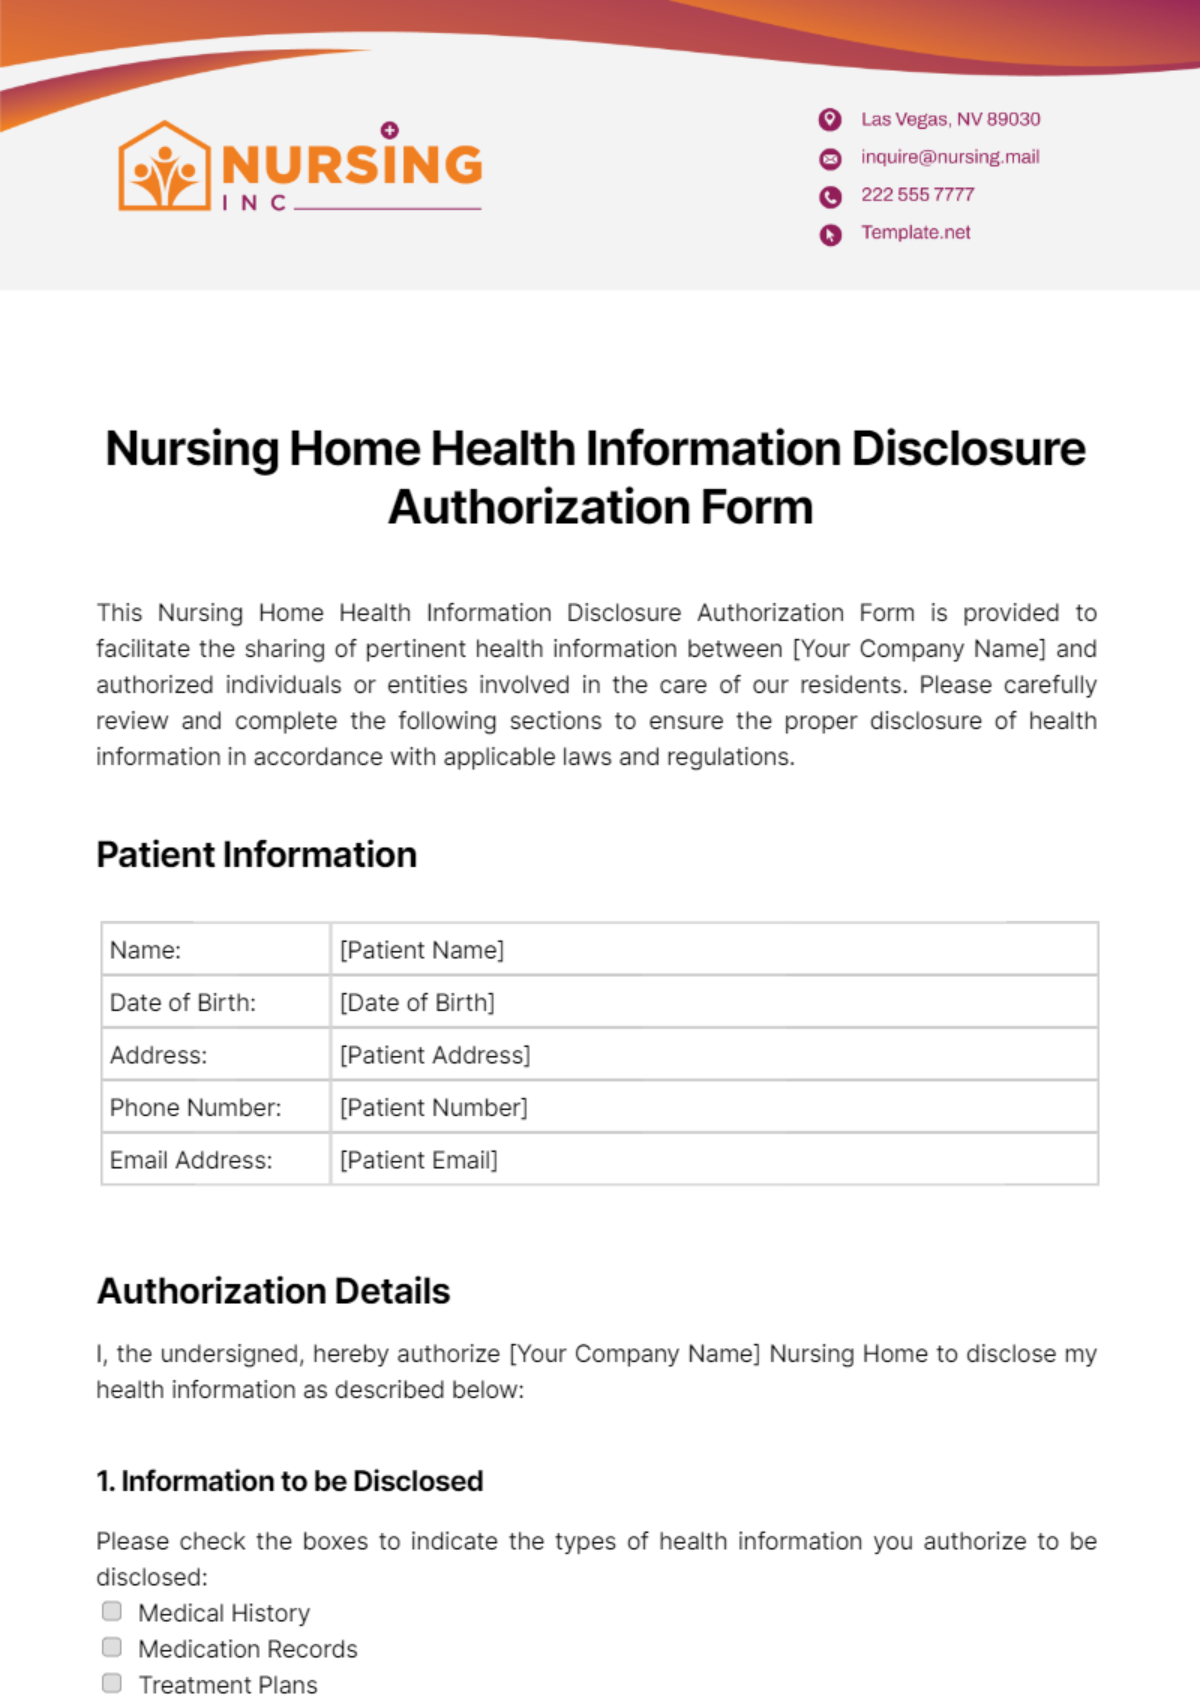 Nursing Home Health Information Disclosure Authorization Form Template